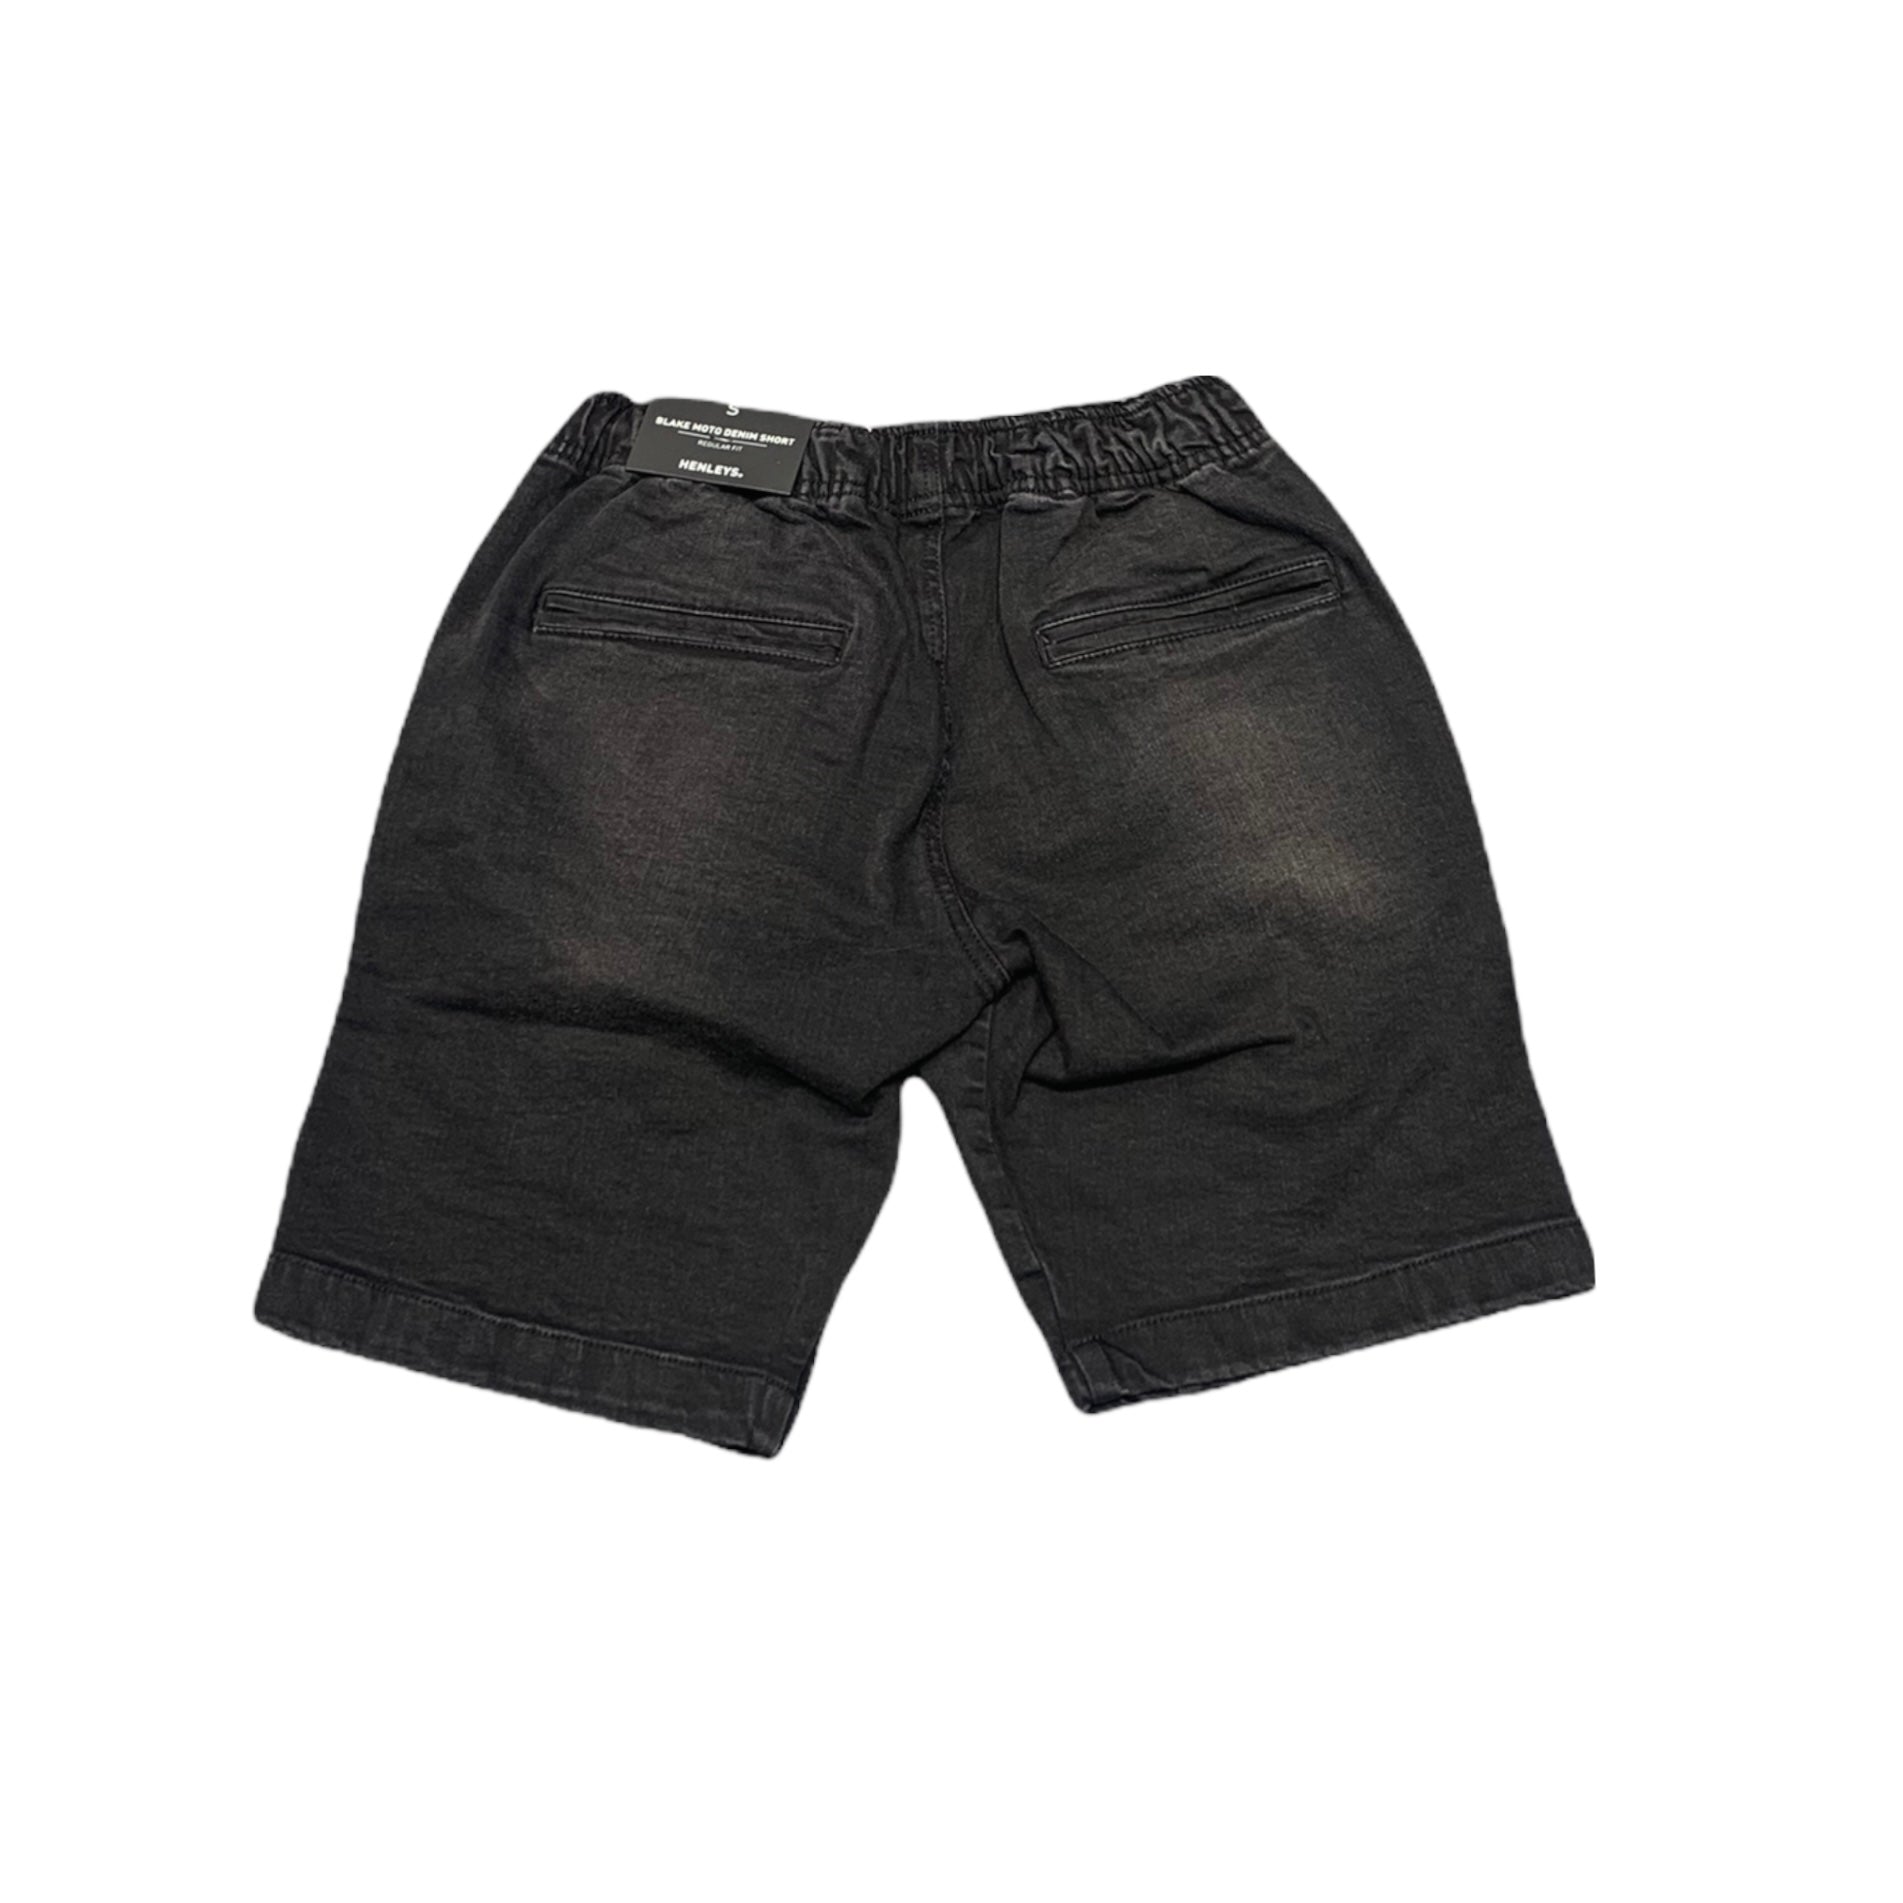 vintage black denim shorts